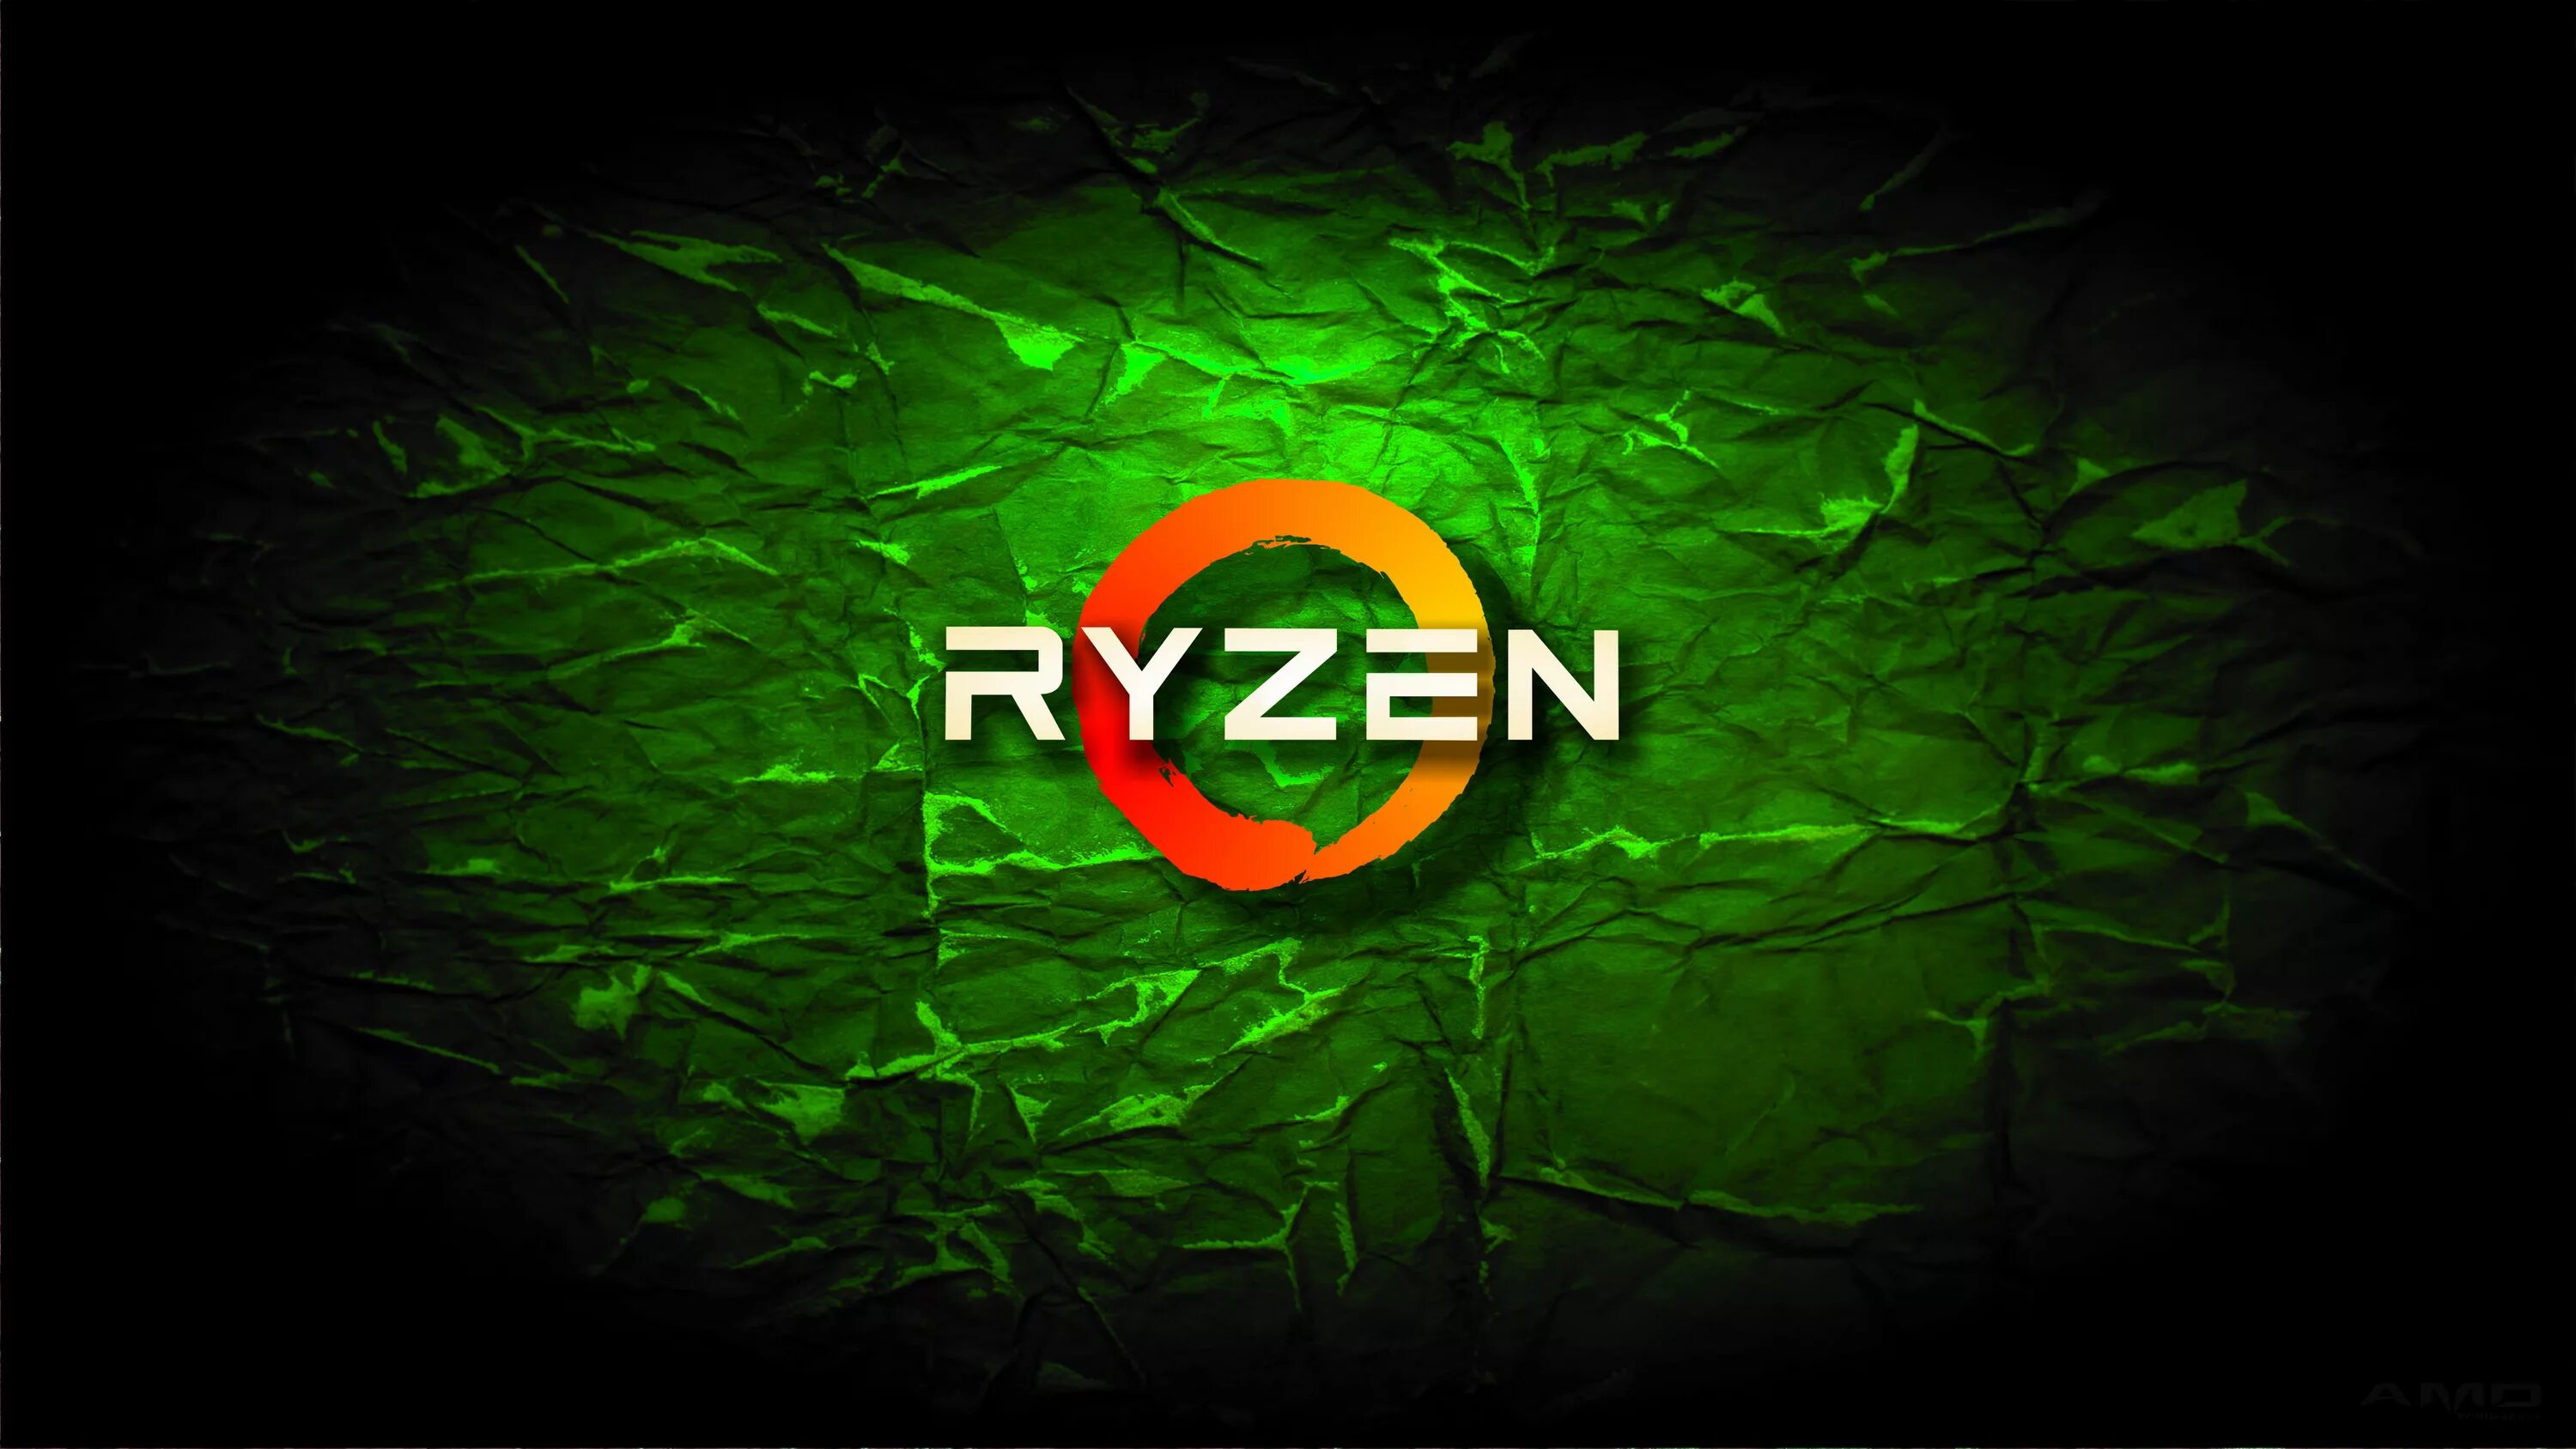 Ryzen 1920x1080. Заставка АМД. Обои на рабочий стол AMD. Заставка Ryzen. Обои Ryzen 4k.